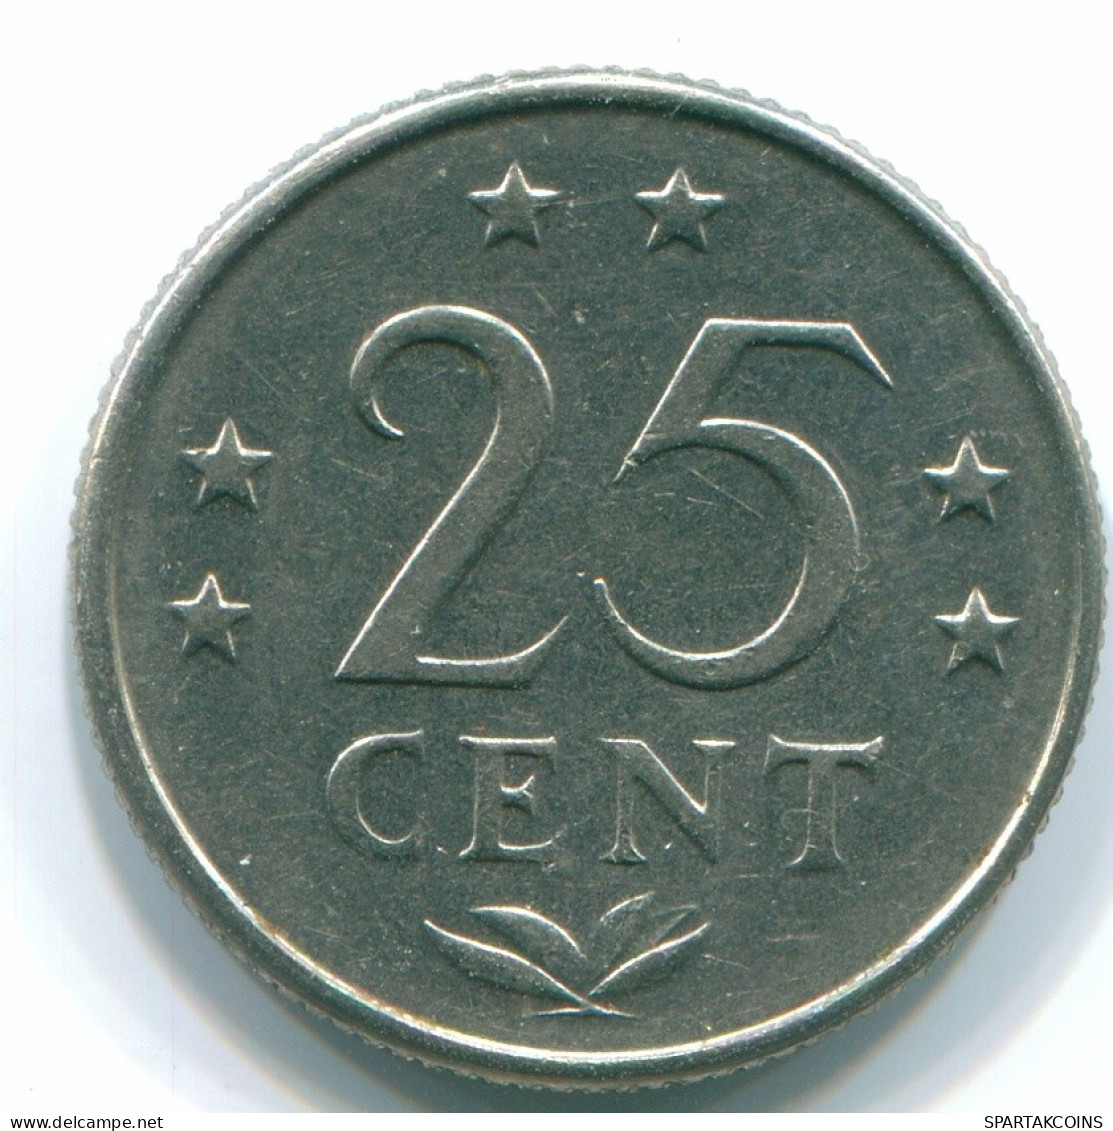 25 CENTS 1971 NIEDERLÄNDISCHE ANTILLEN Nickel Koloniale Münze #S11529.D.A - Netherlands Antilles